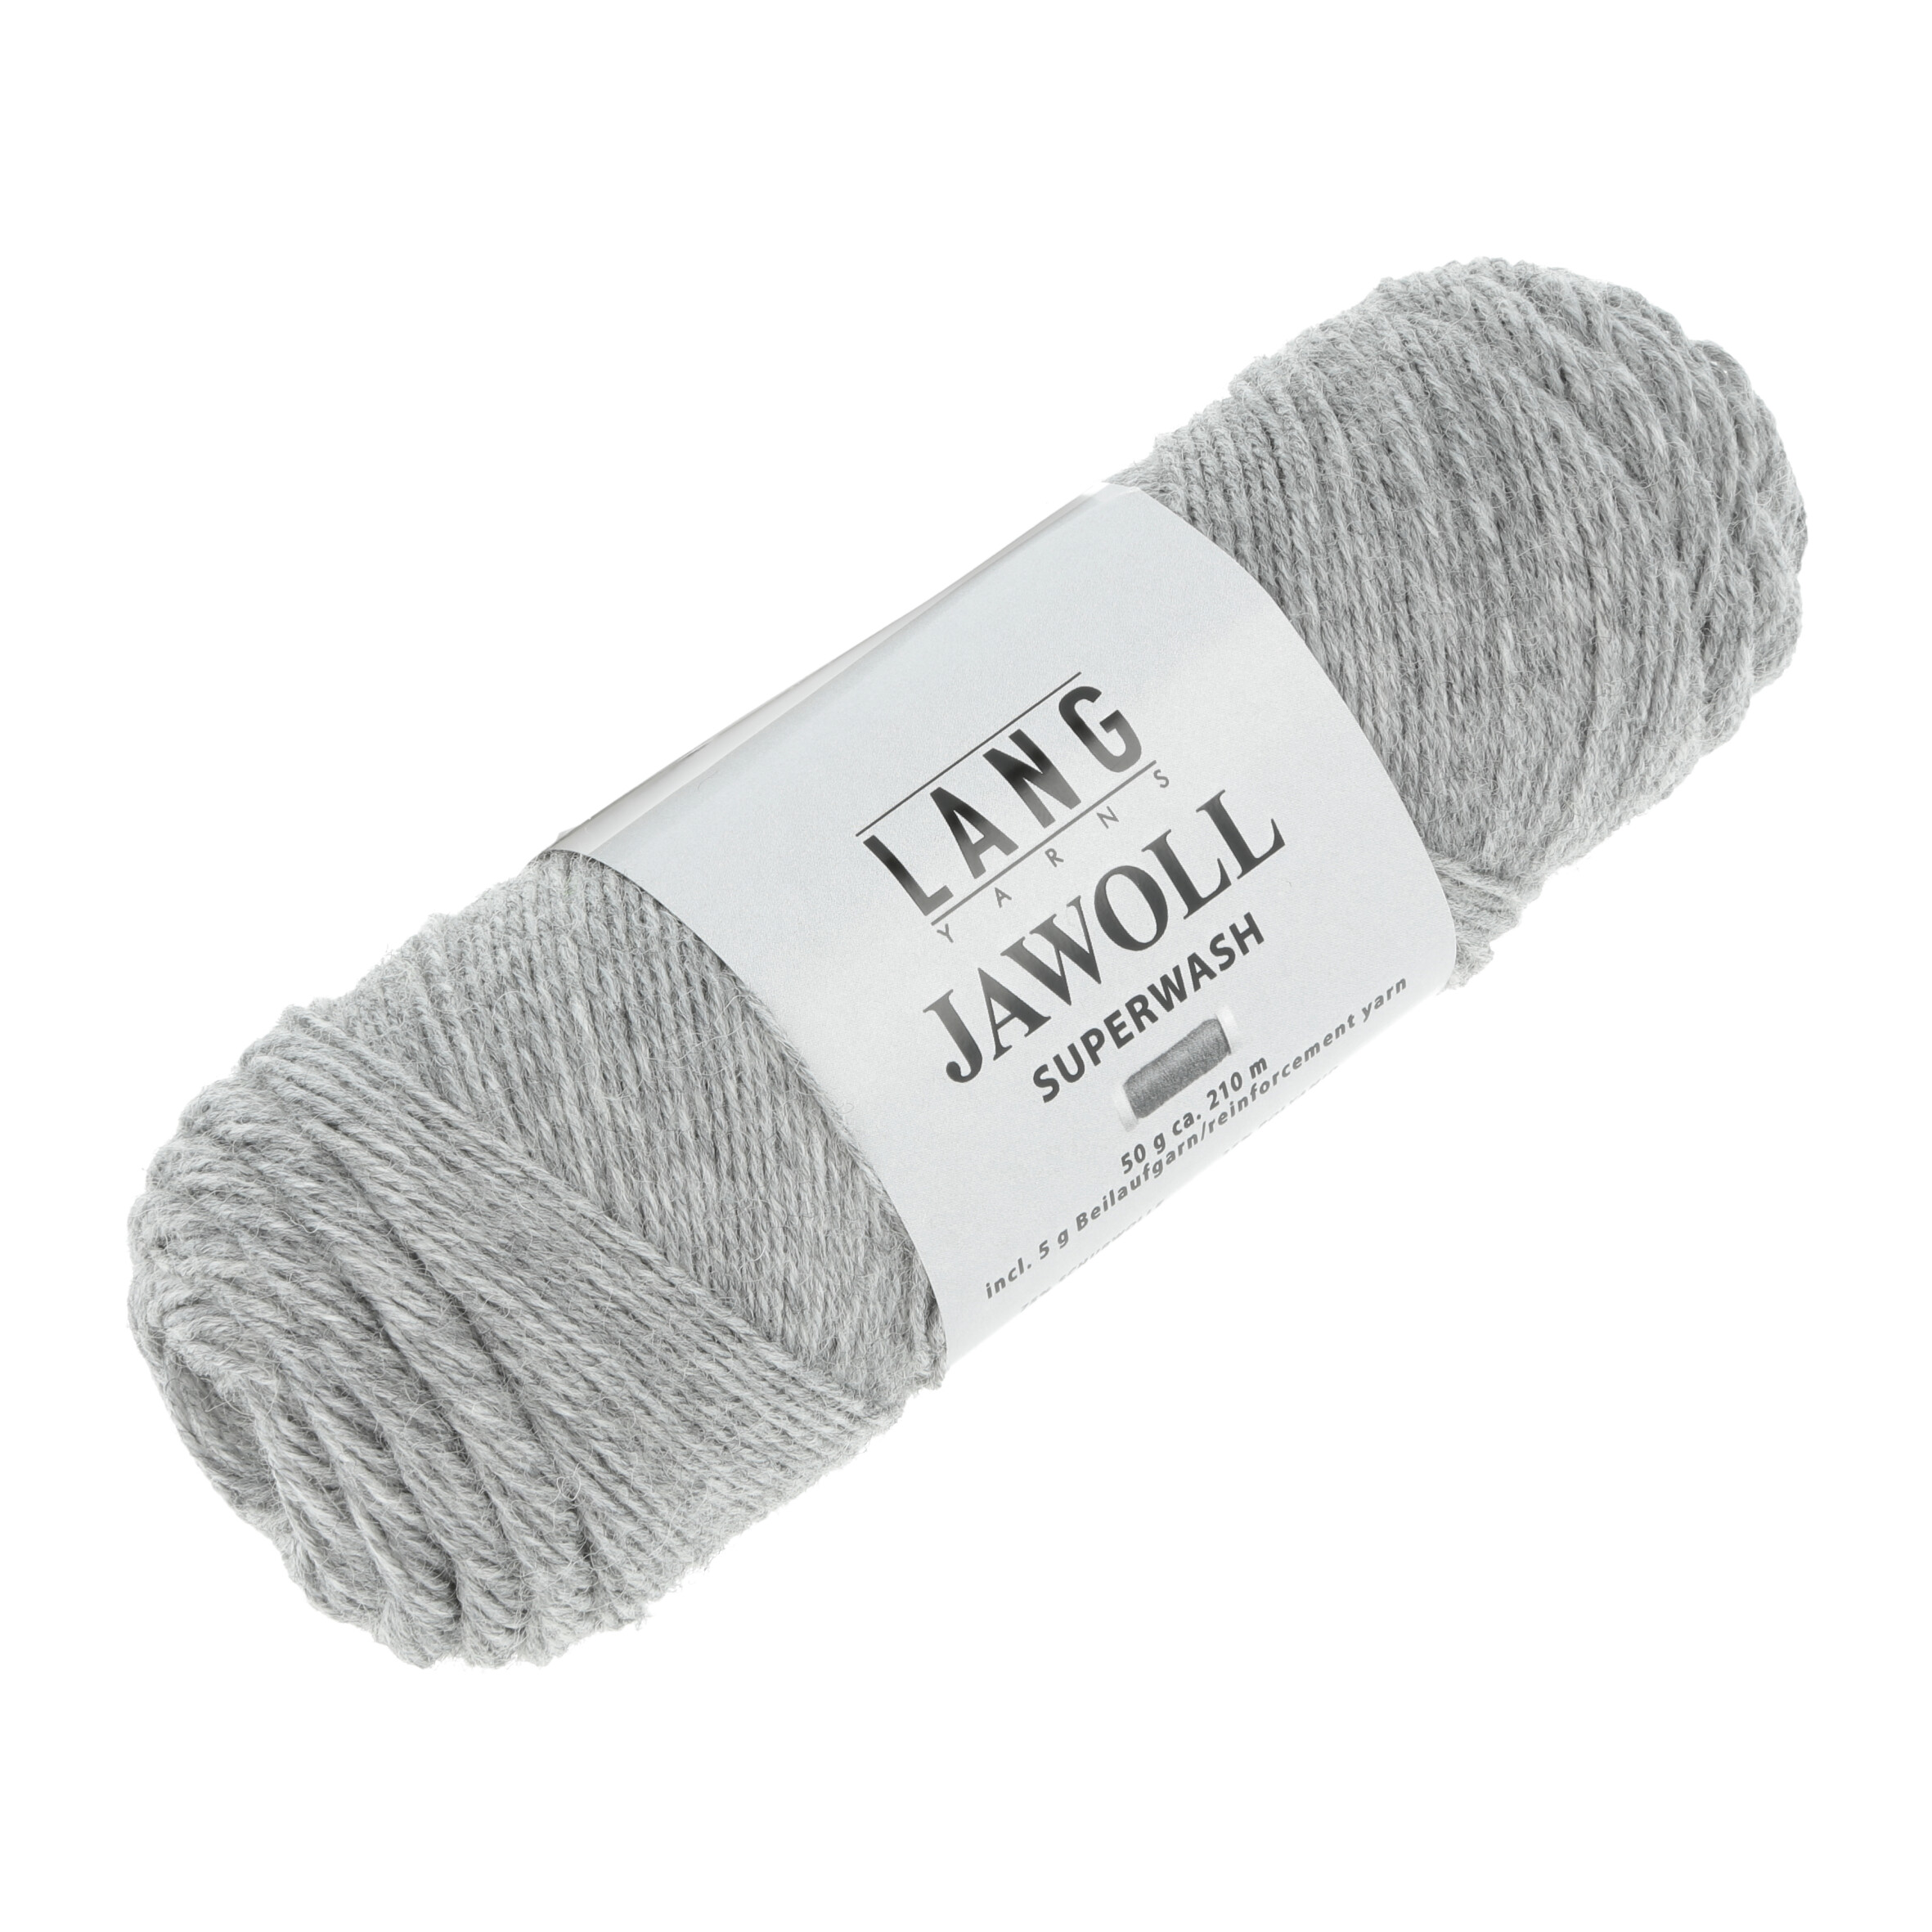 Jawoll Strumpfgarn von Lang Yarns 0005 - grau mélange